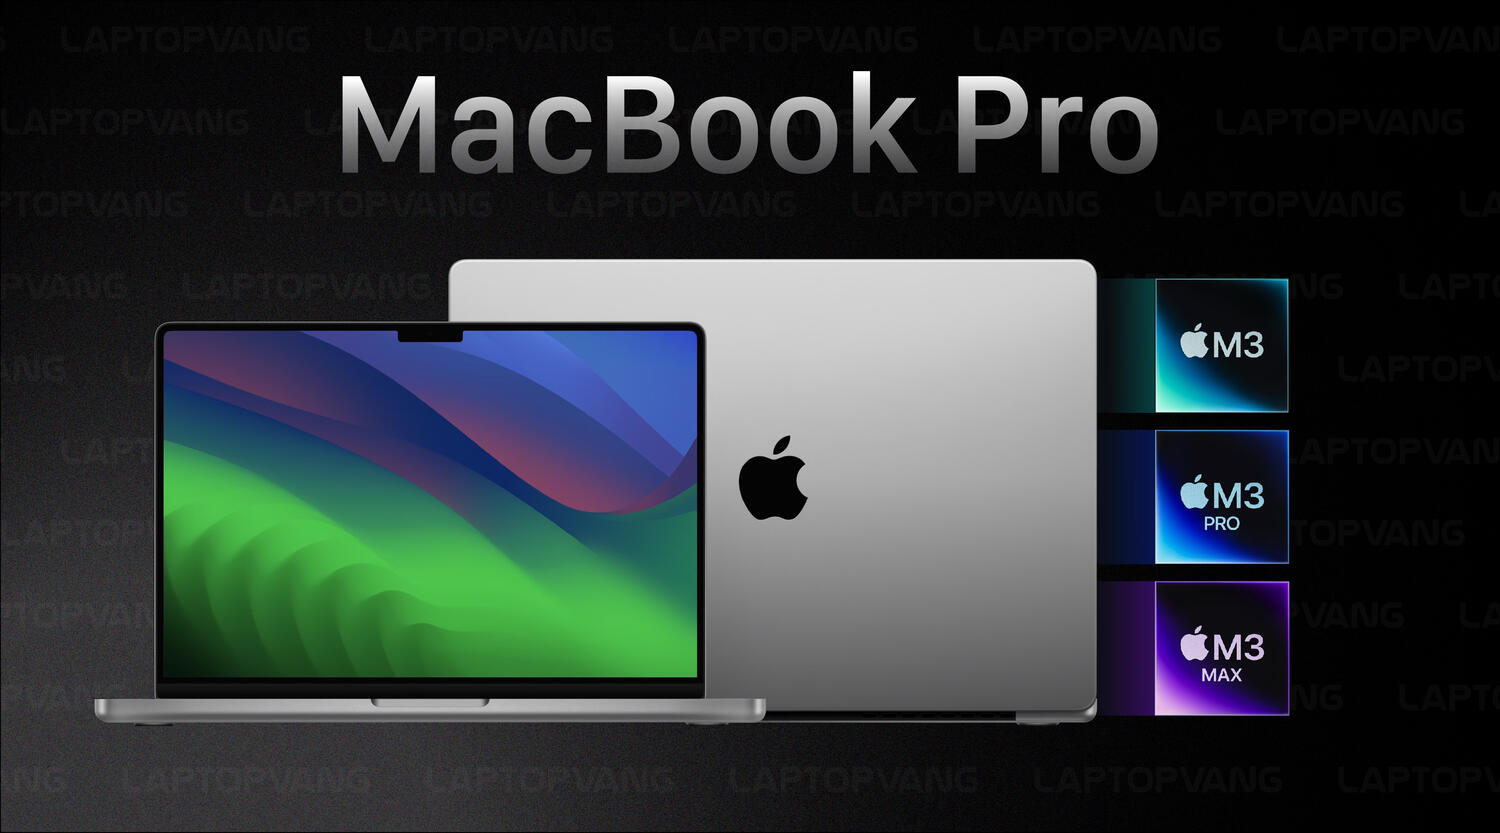 giá macbook pro m3